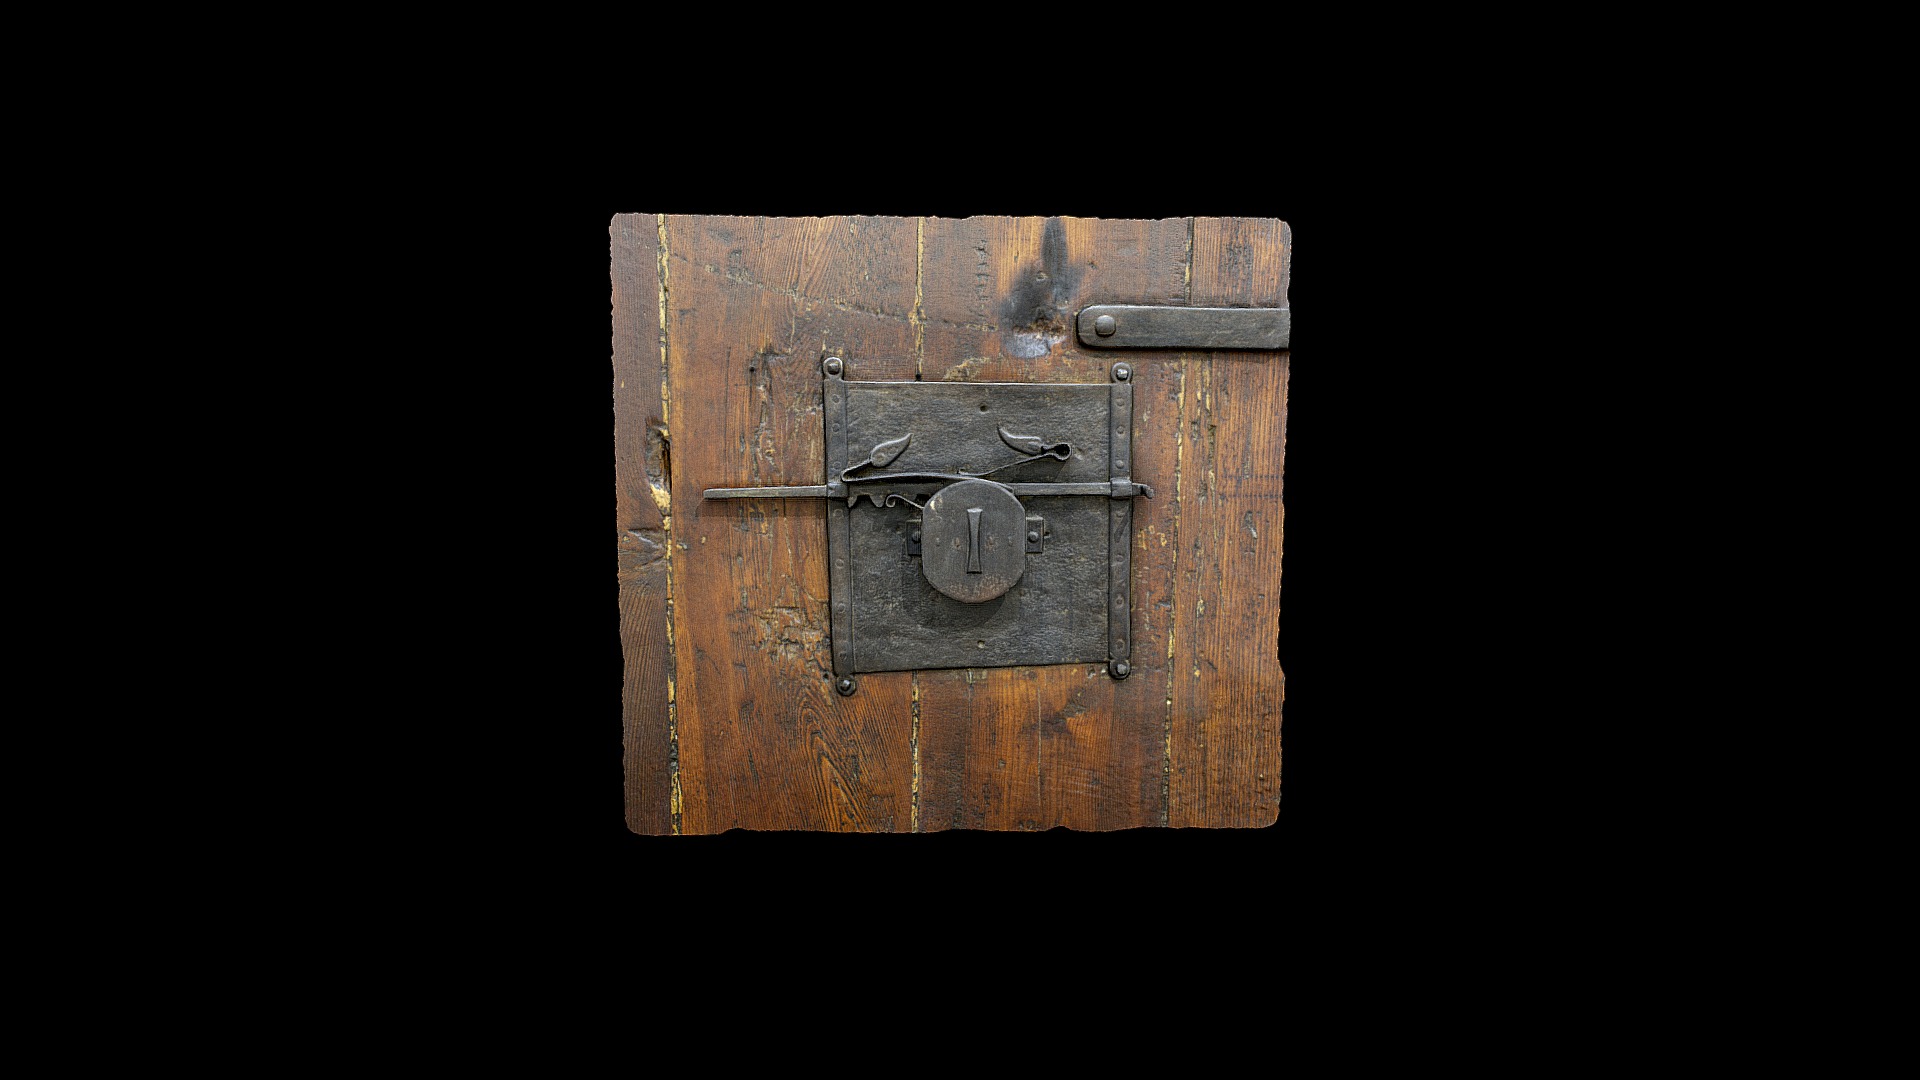 Antica serratura in ferro battuto / Ancient lock